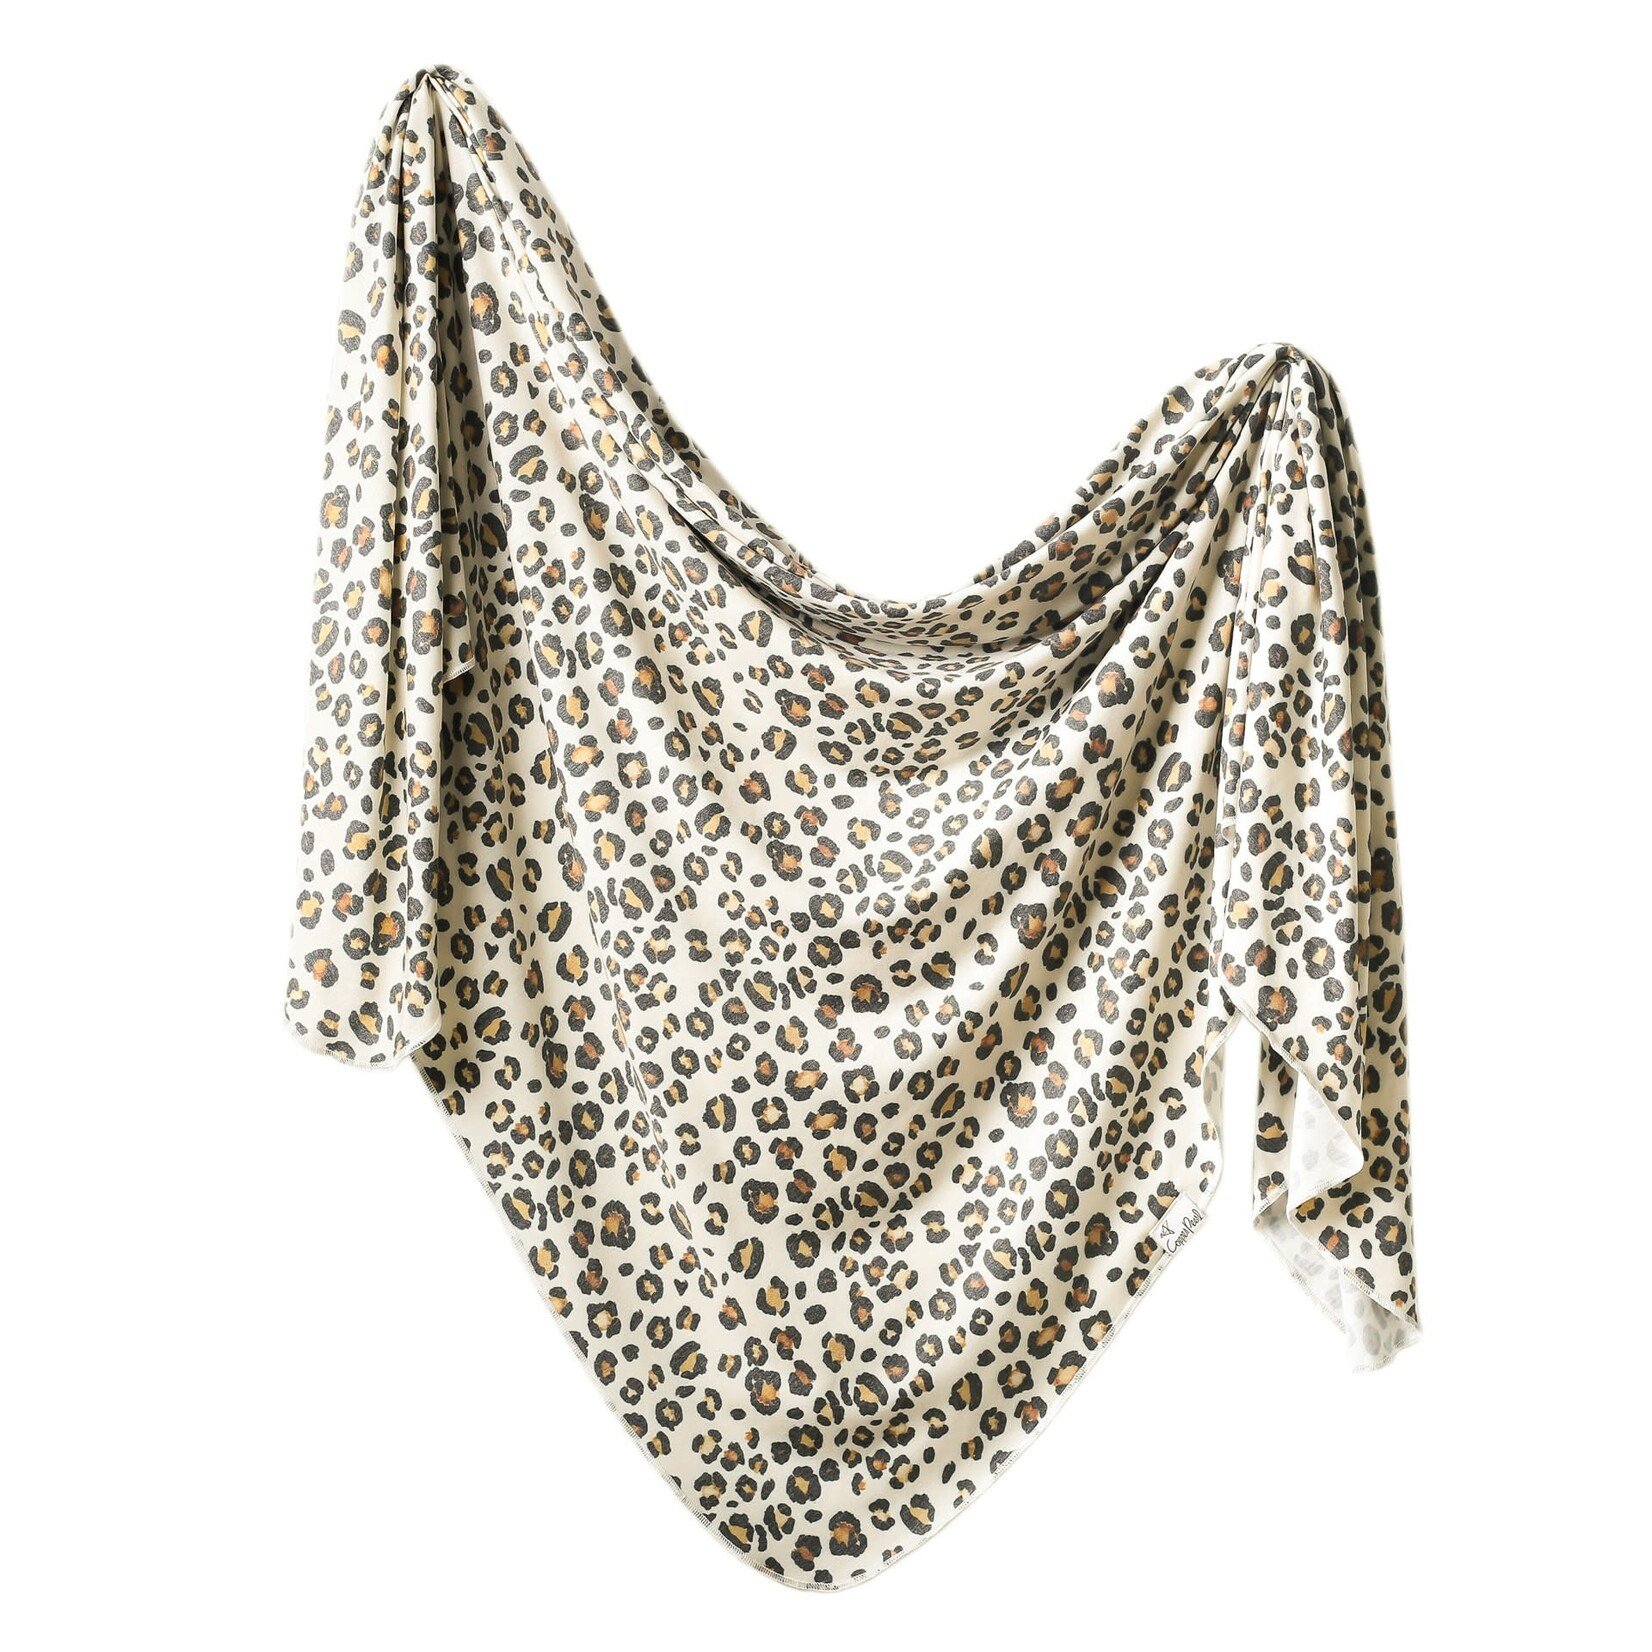 Copper Pearl Knit Blanket - Zara